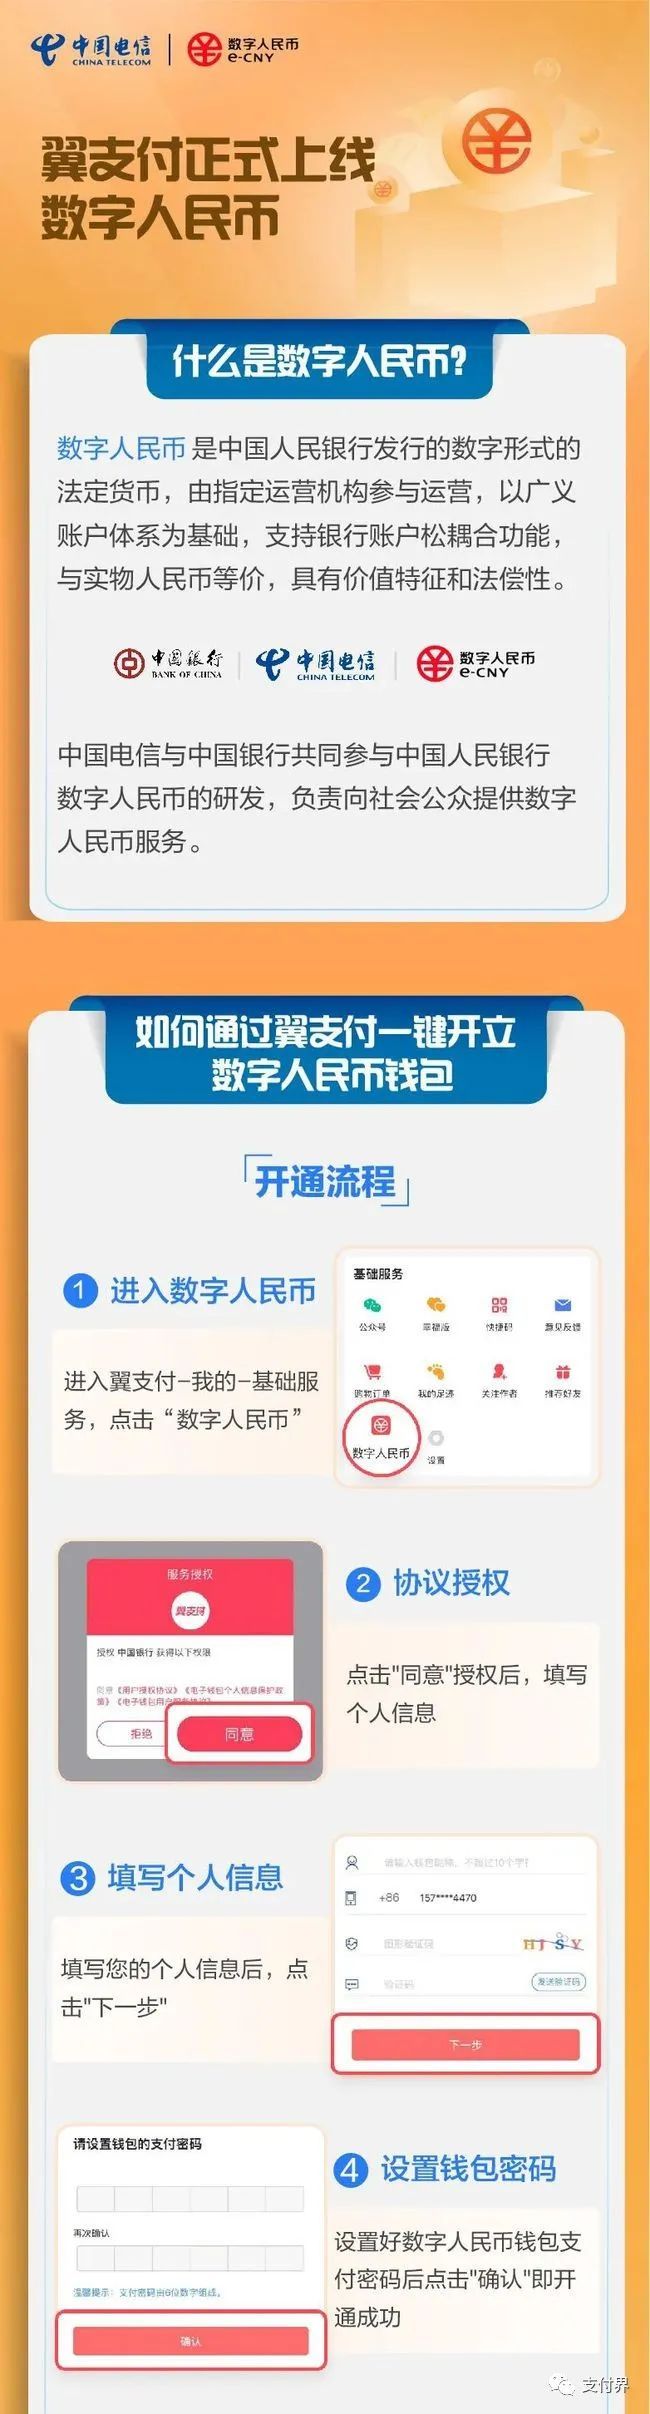 siteshilian.com 以太坊是什么货币_siteshilian.com 以太坊的货币_以太坊查看钱包货币